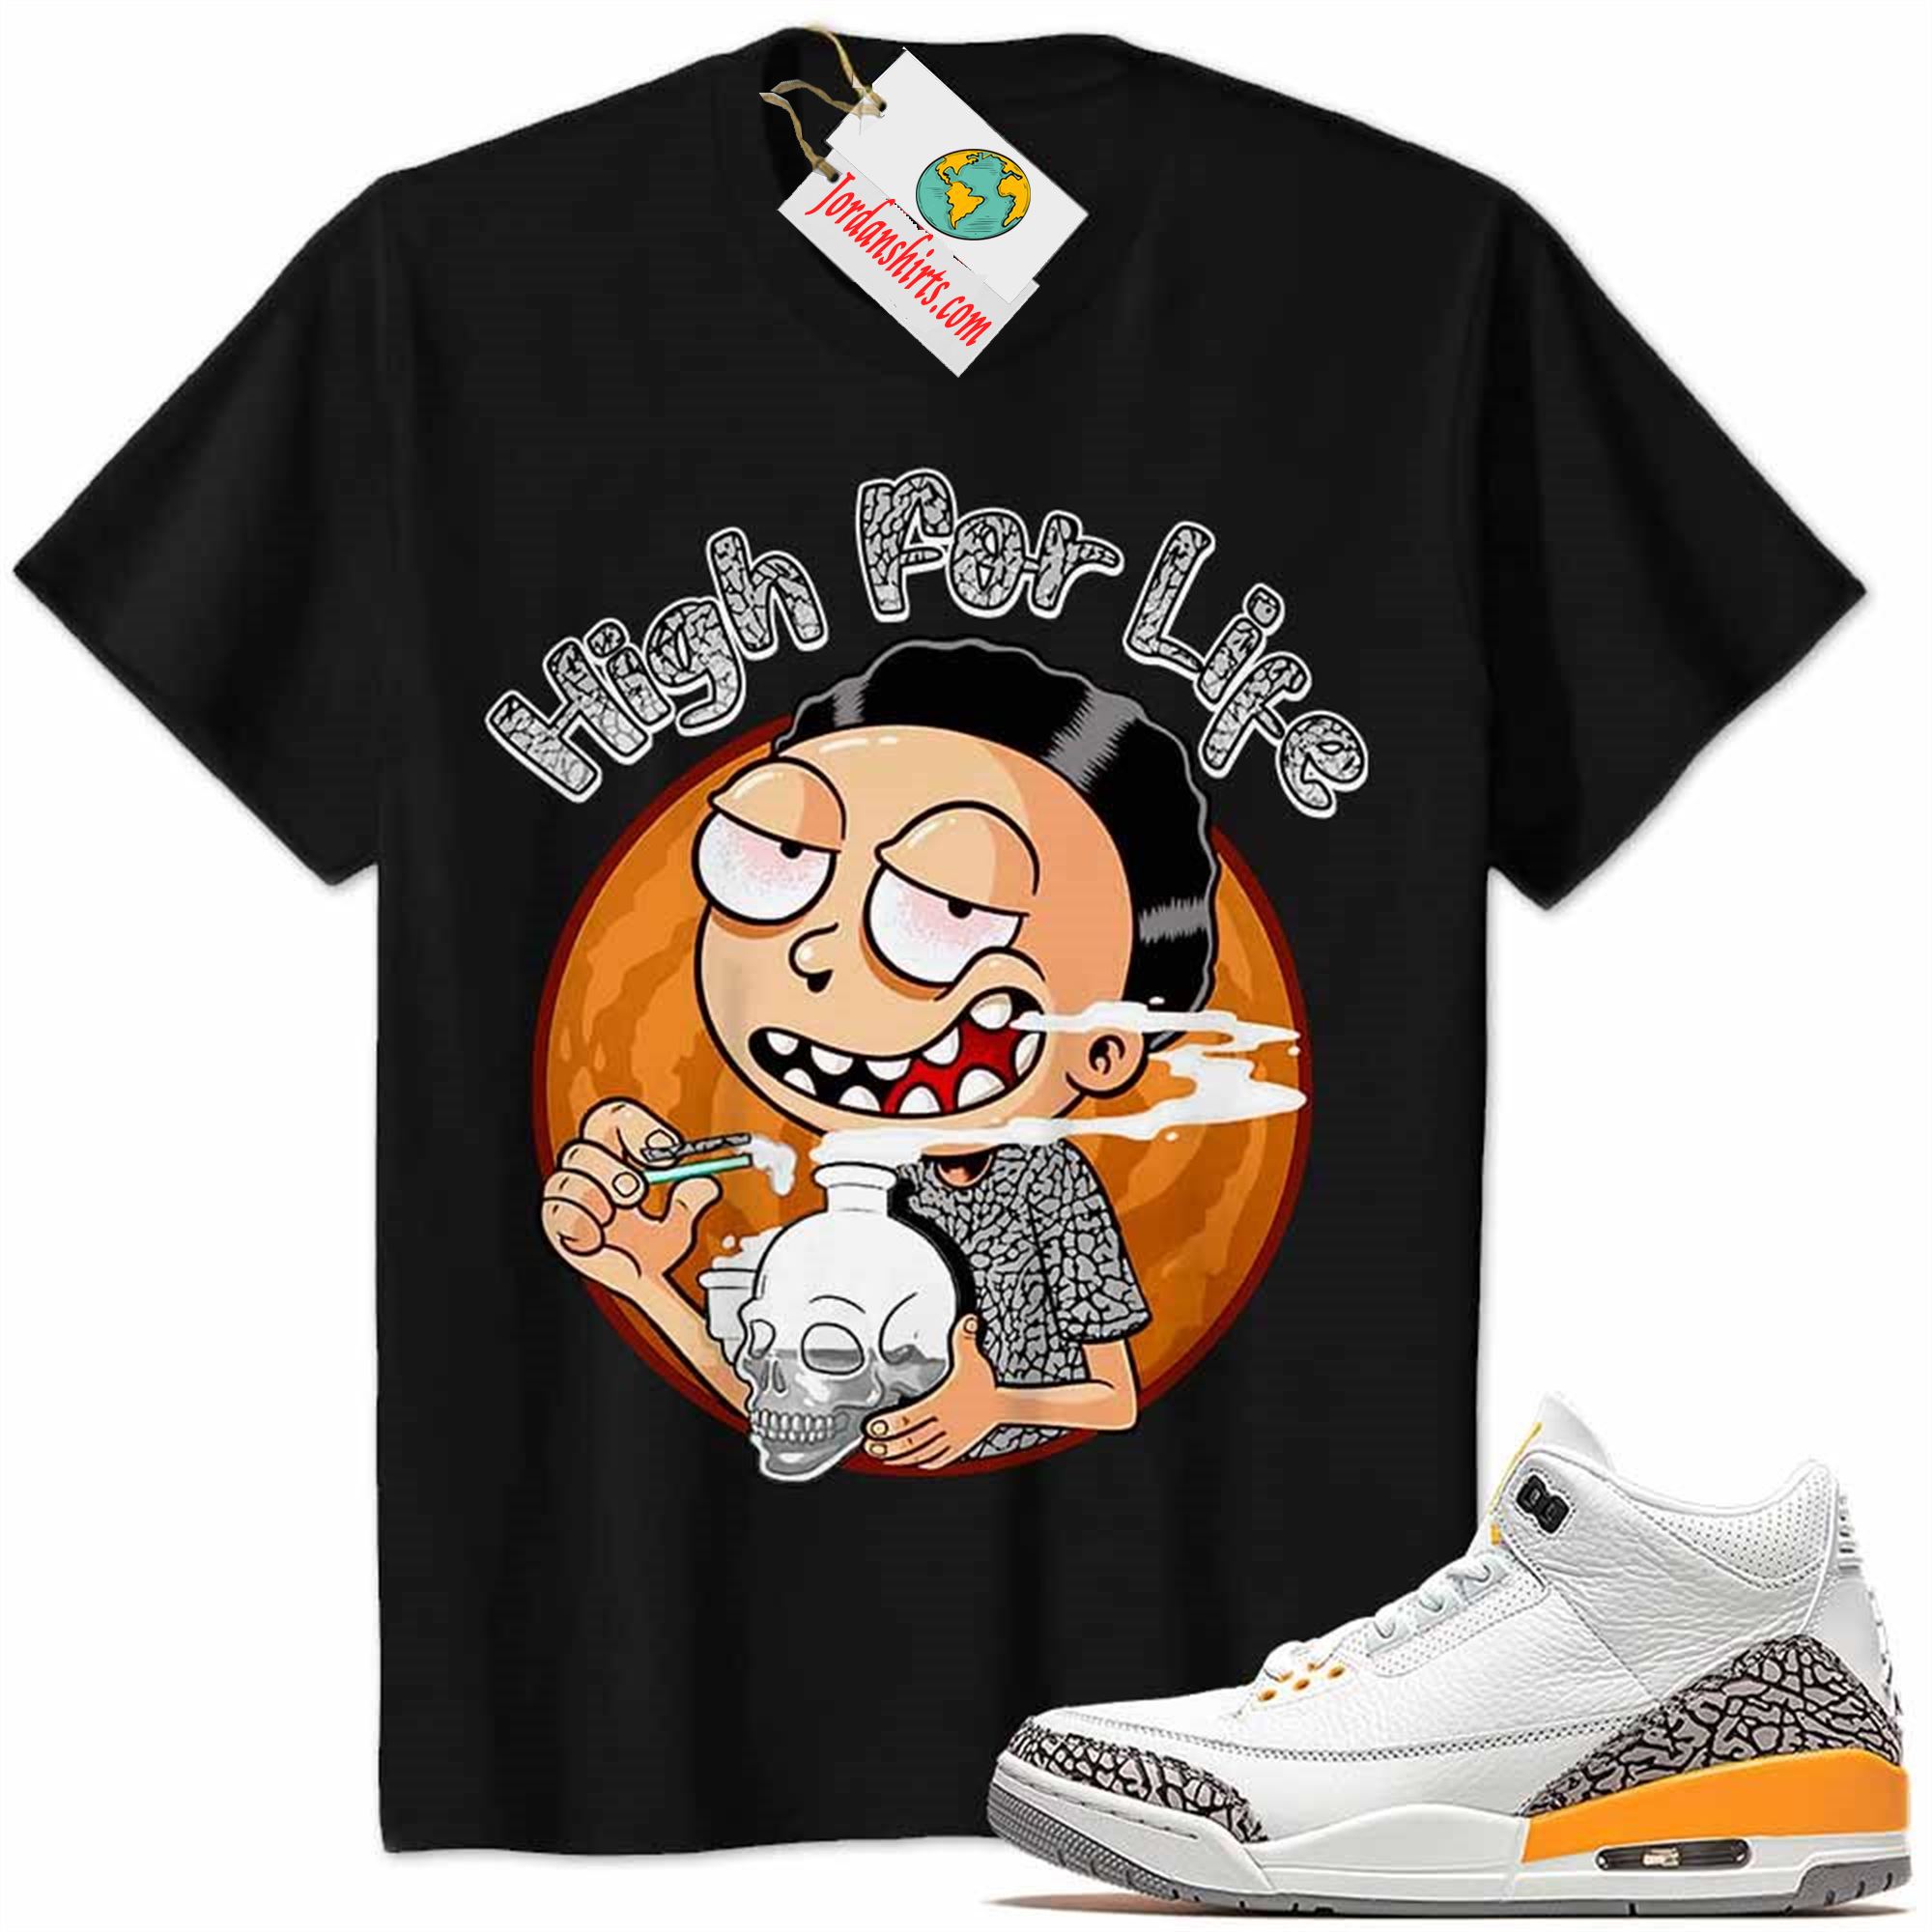 Jordan 3 Shirt, Jordan 3 Laser Orange Shirt Morty High For Life Black Size Up To 5xl